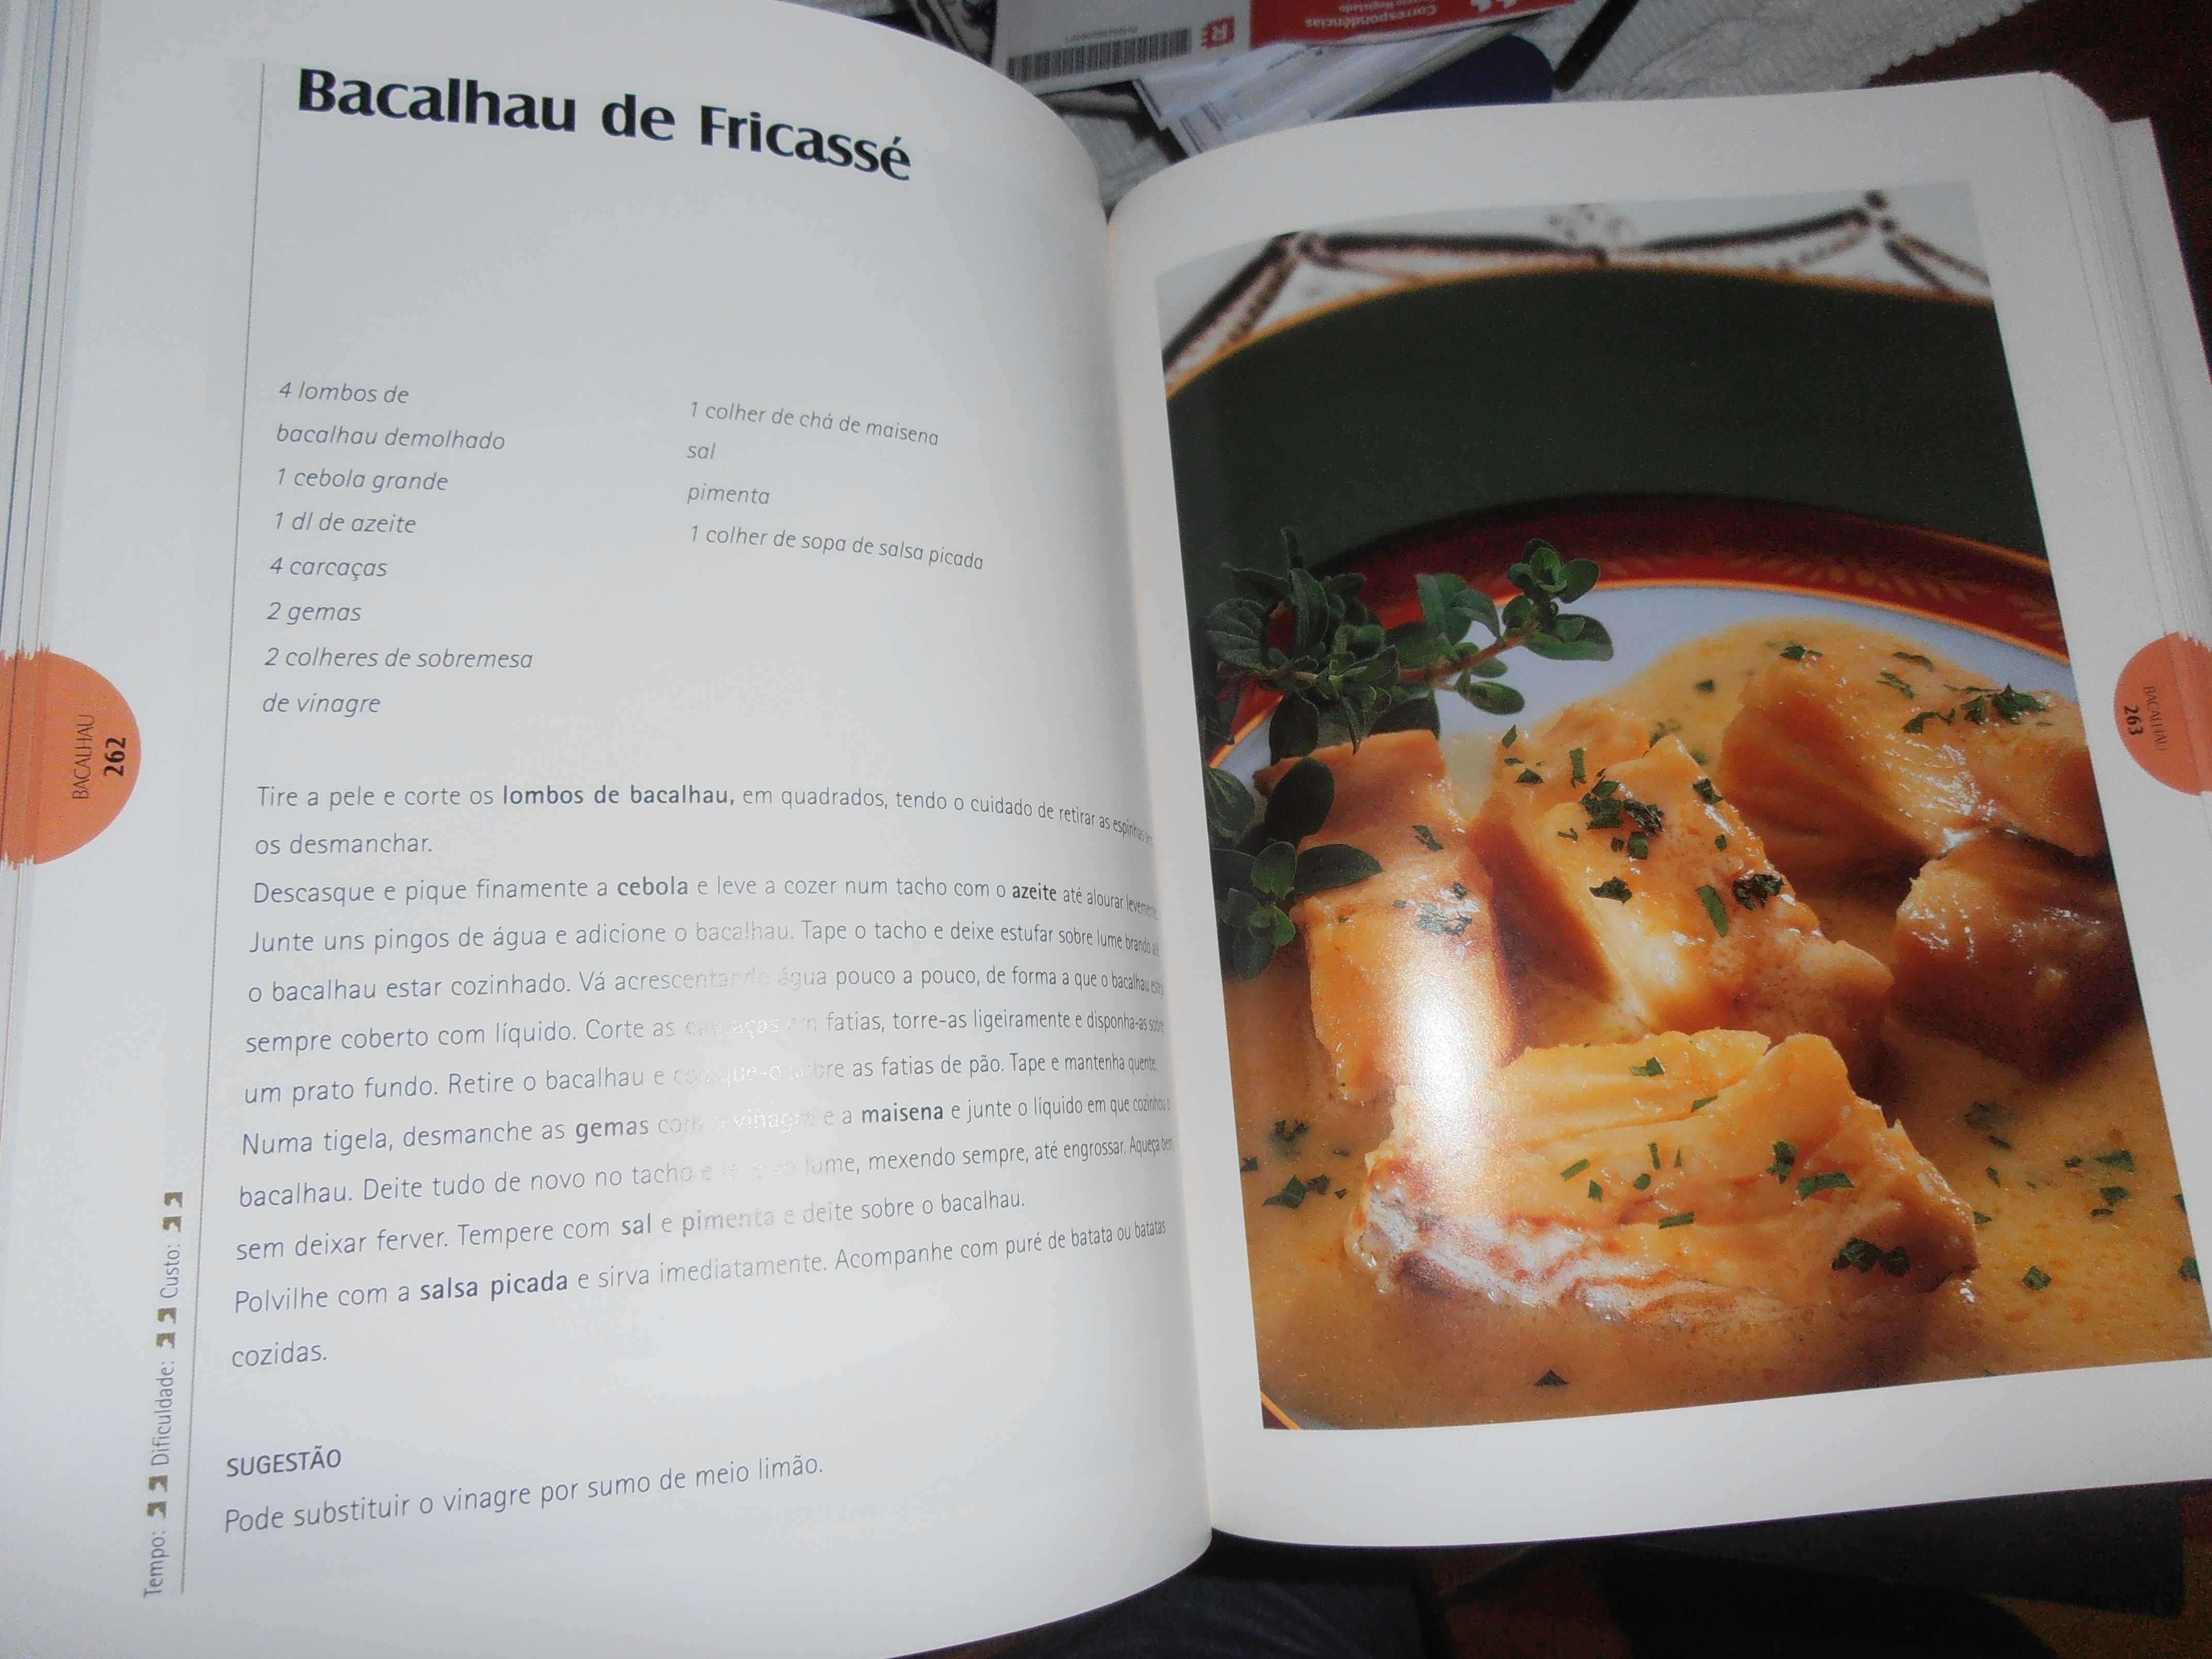 vaqueiro culinarium,a magia dos sabores,2 volumes,1ºed.,2001